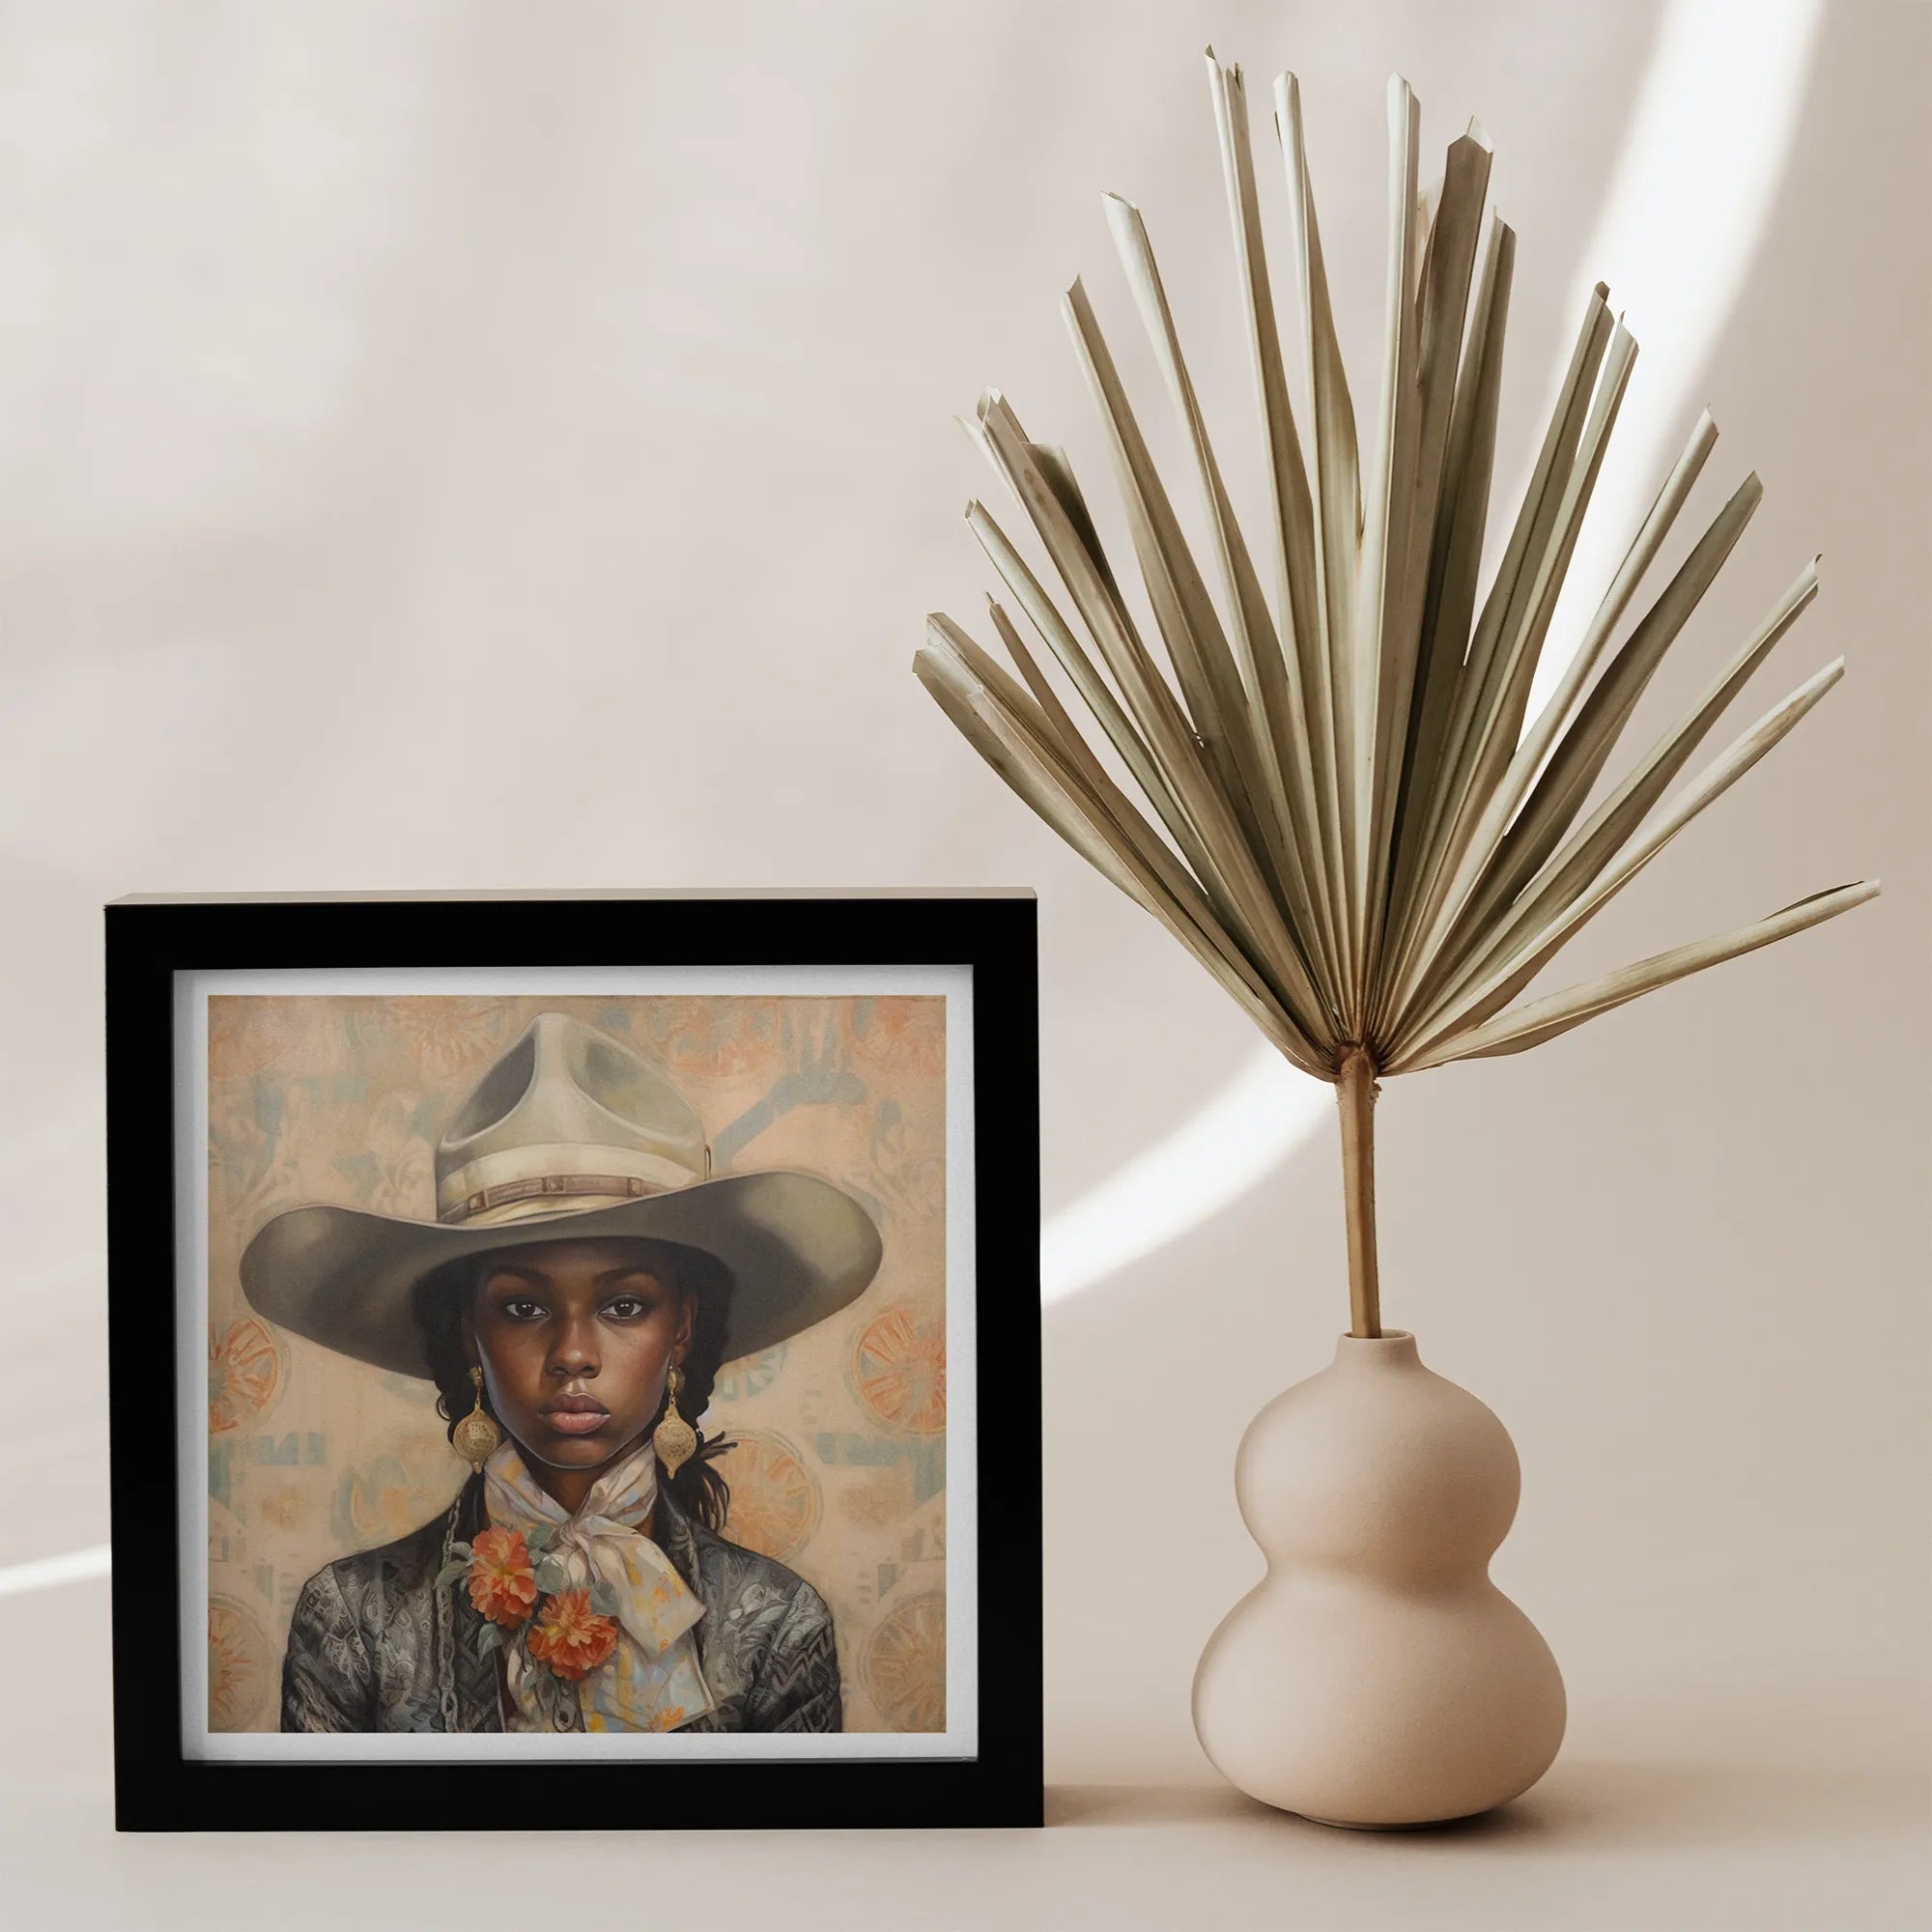 Letitia - Lesbian Black Cowgirl Art Print - Wlw Sapphic Femme - 12’x12’ - Posters Prints & Visual Artwork